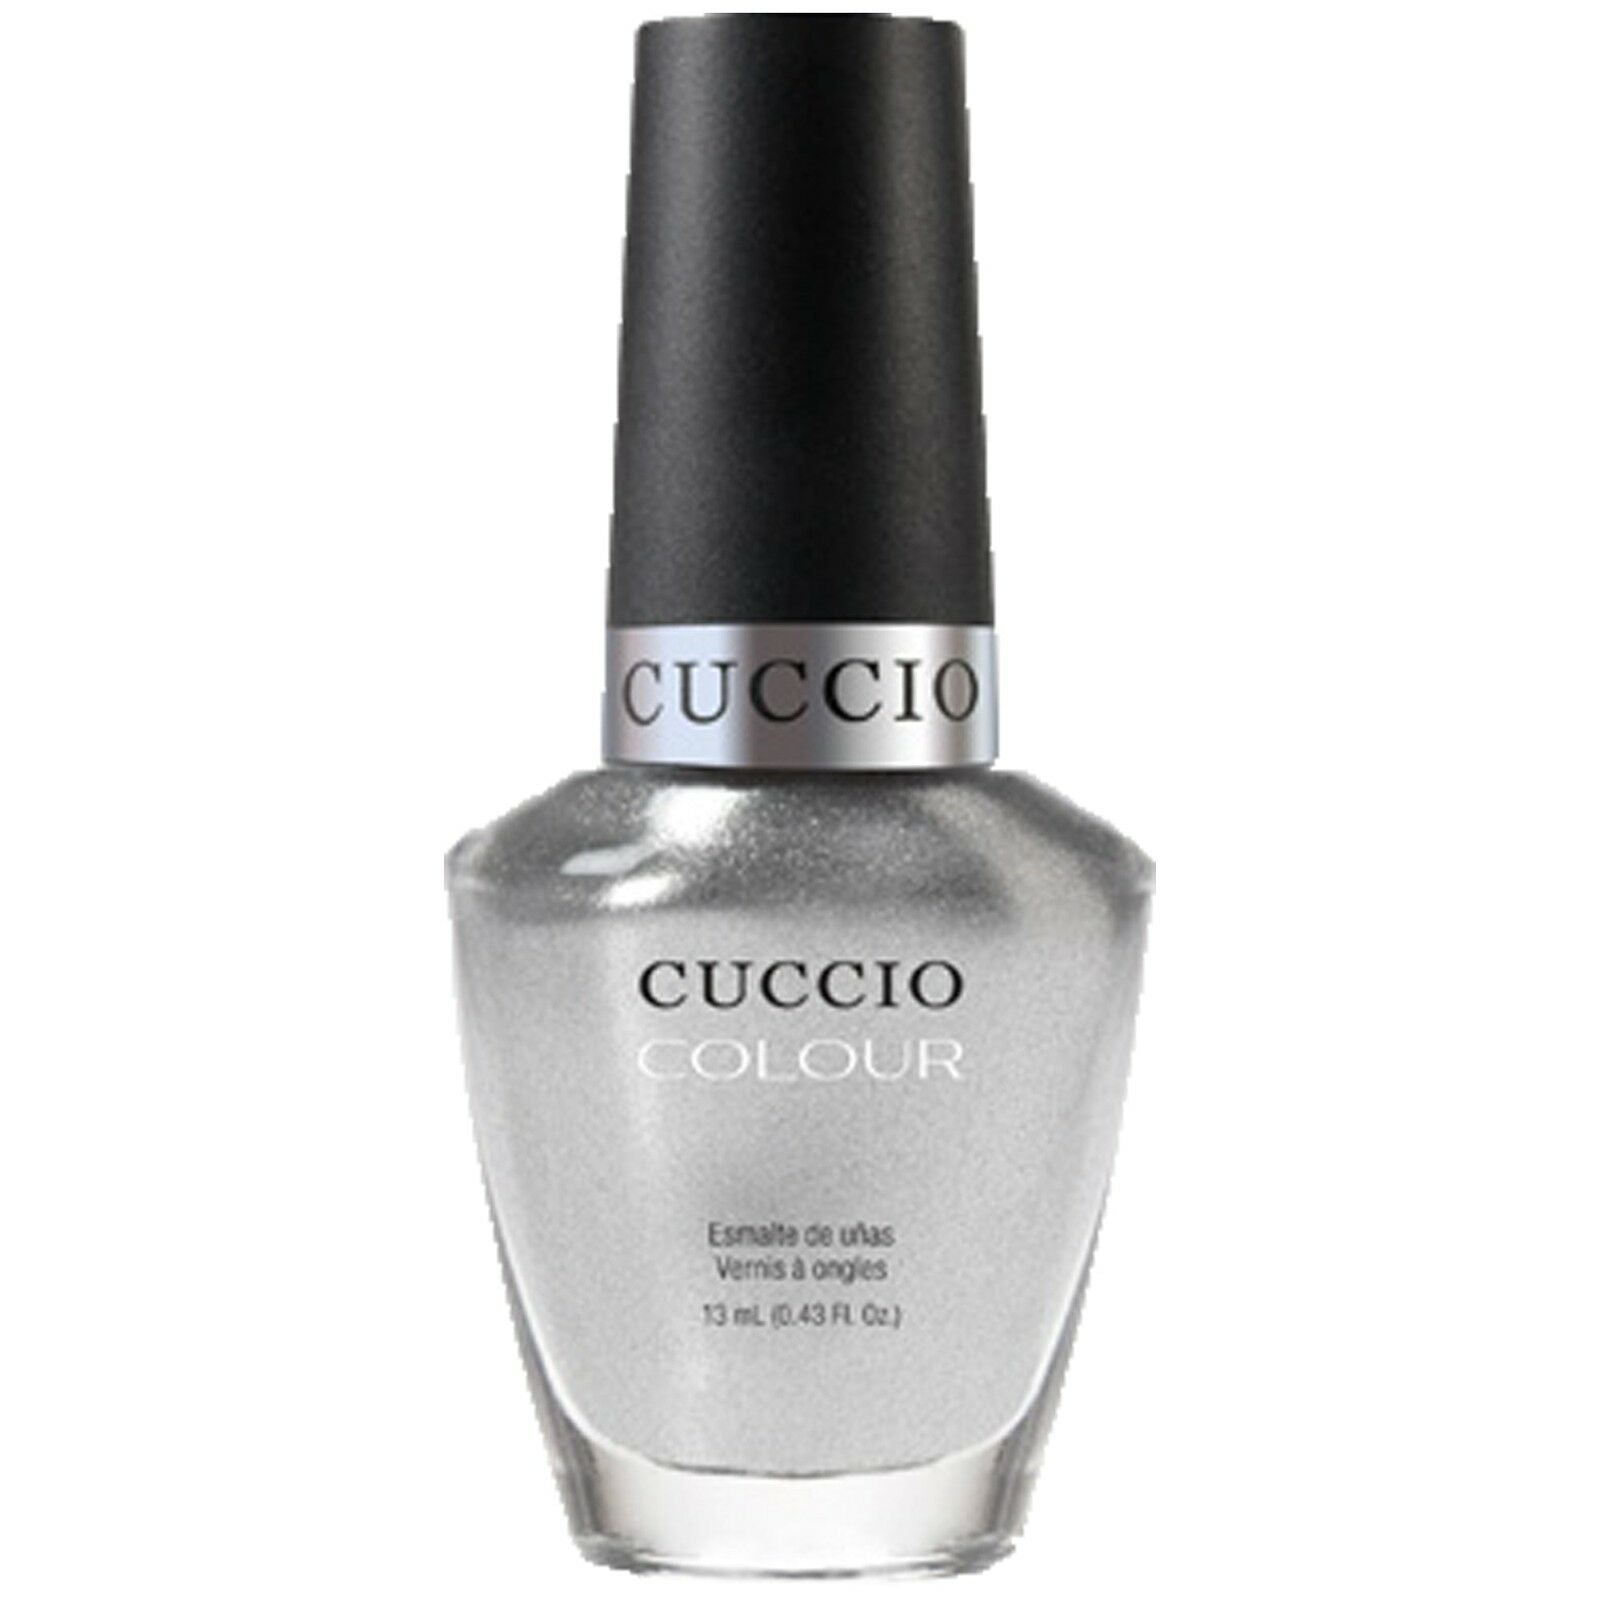 Cuccio Colour Colour Nail Polish - Triple Pigmented India | Ubuy